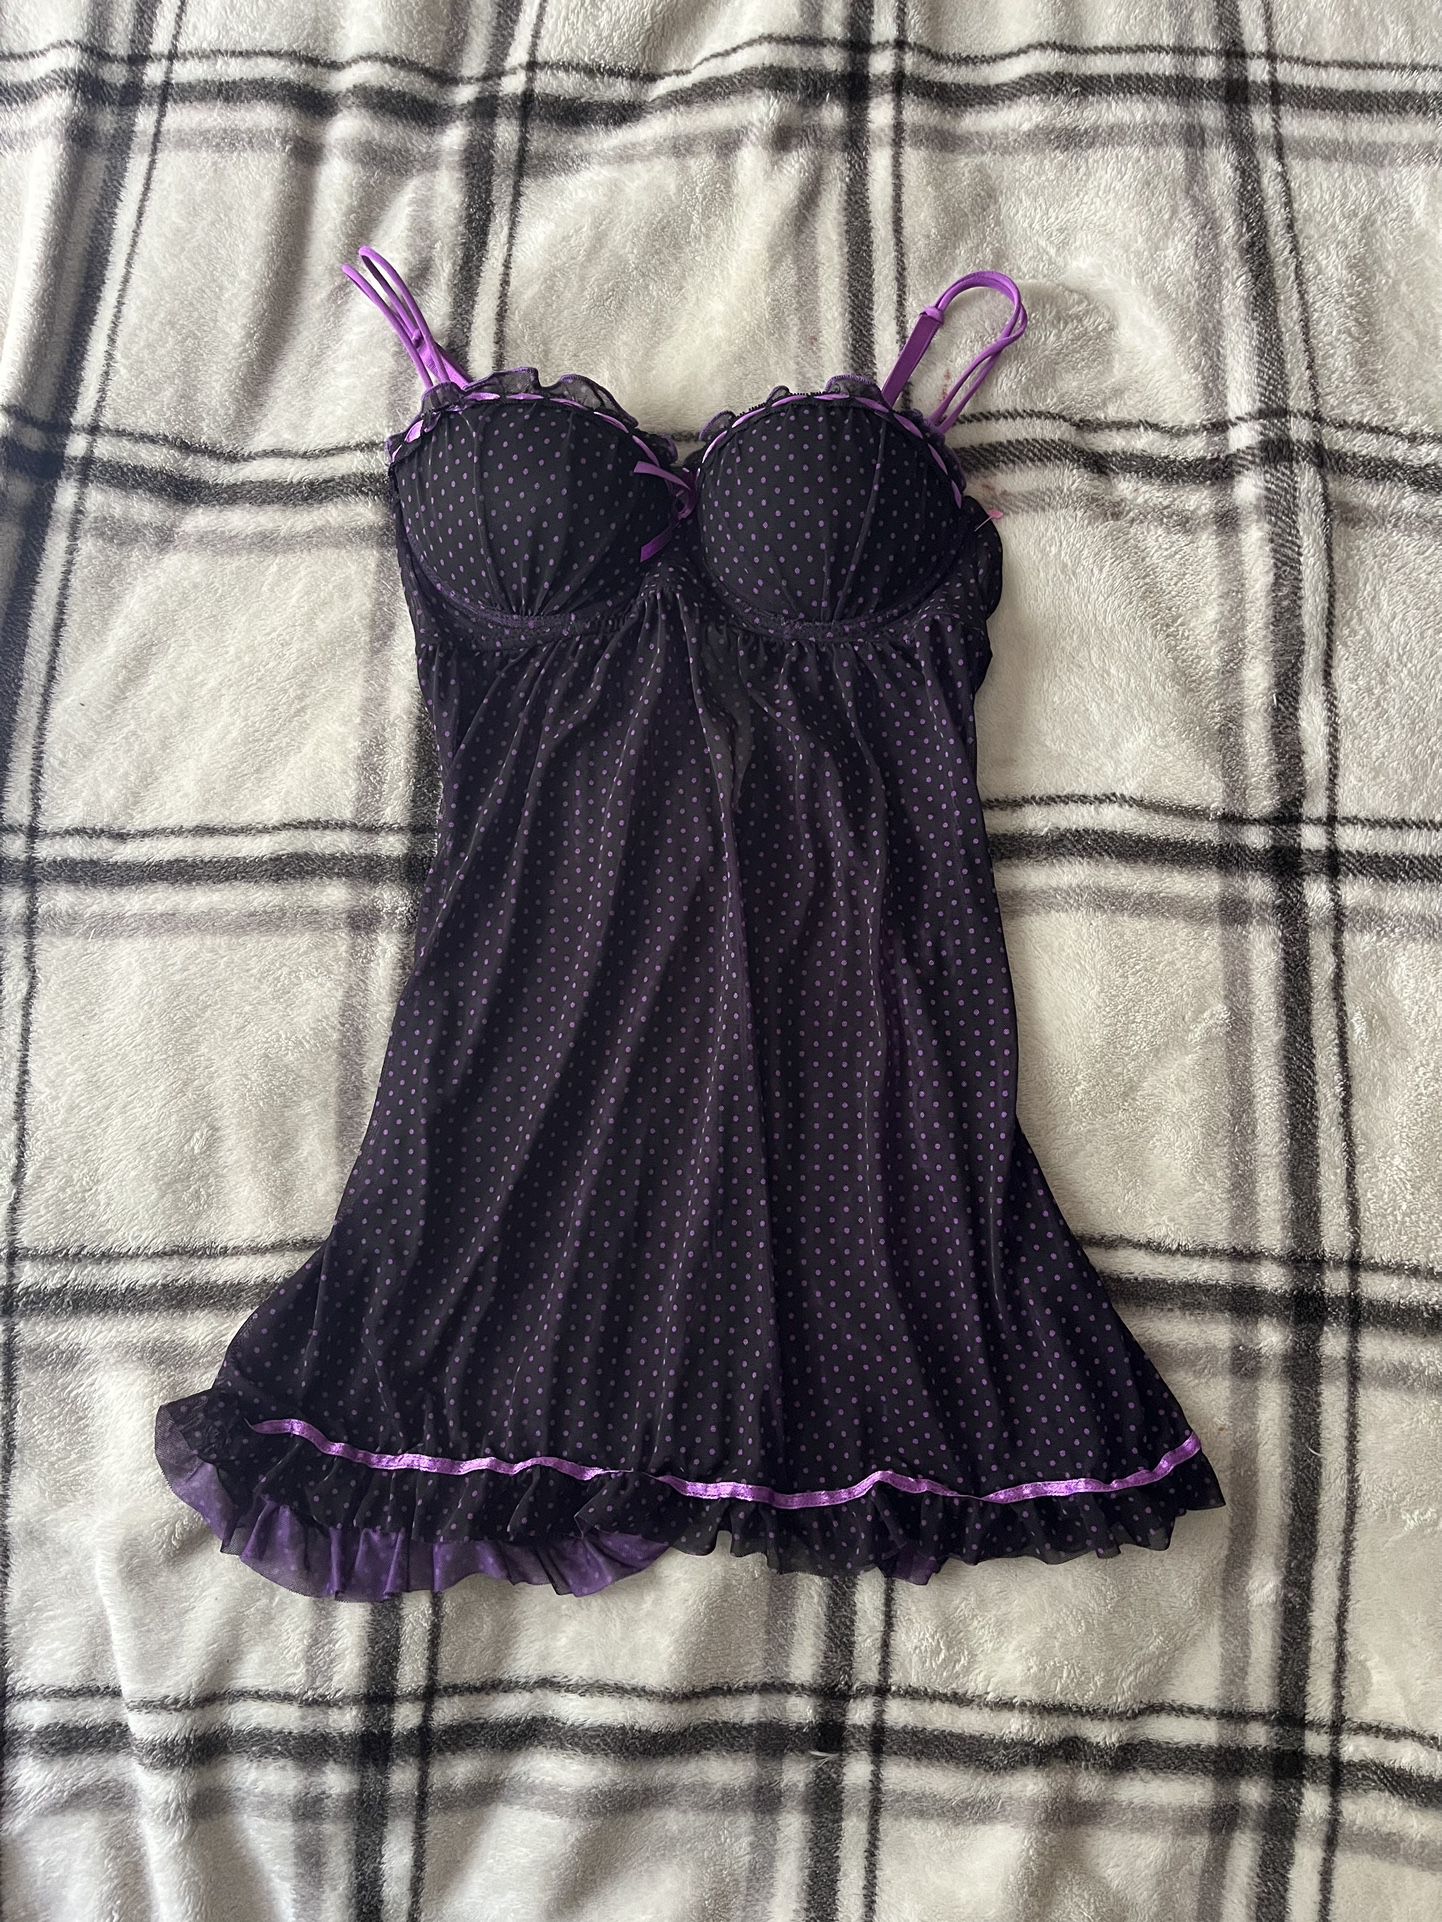 Black and purple goth grunge lace mini slip dress